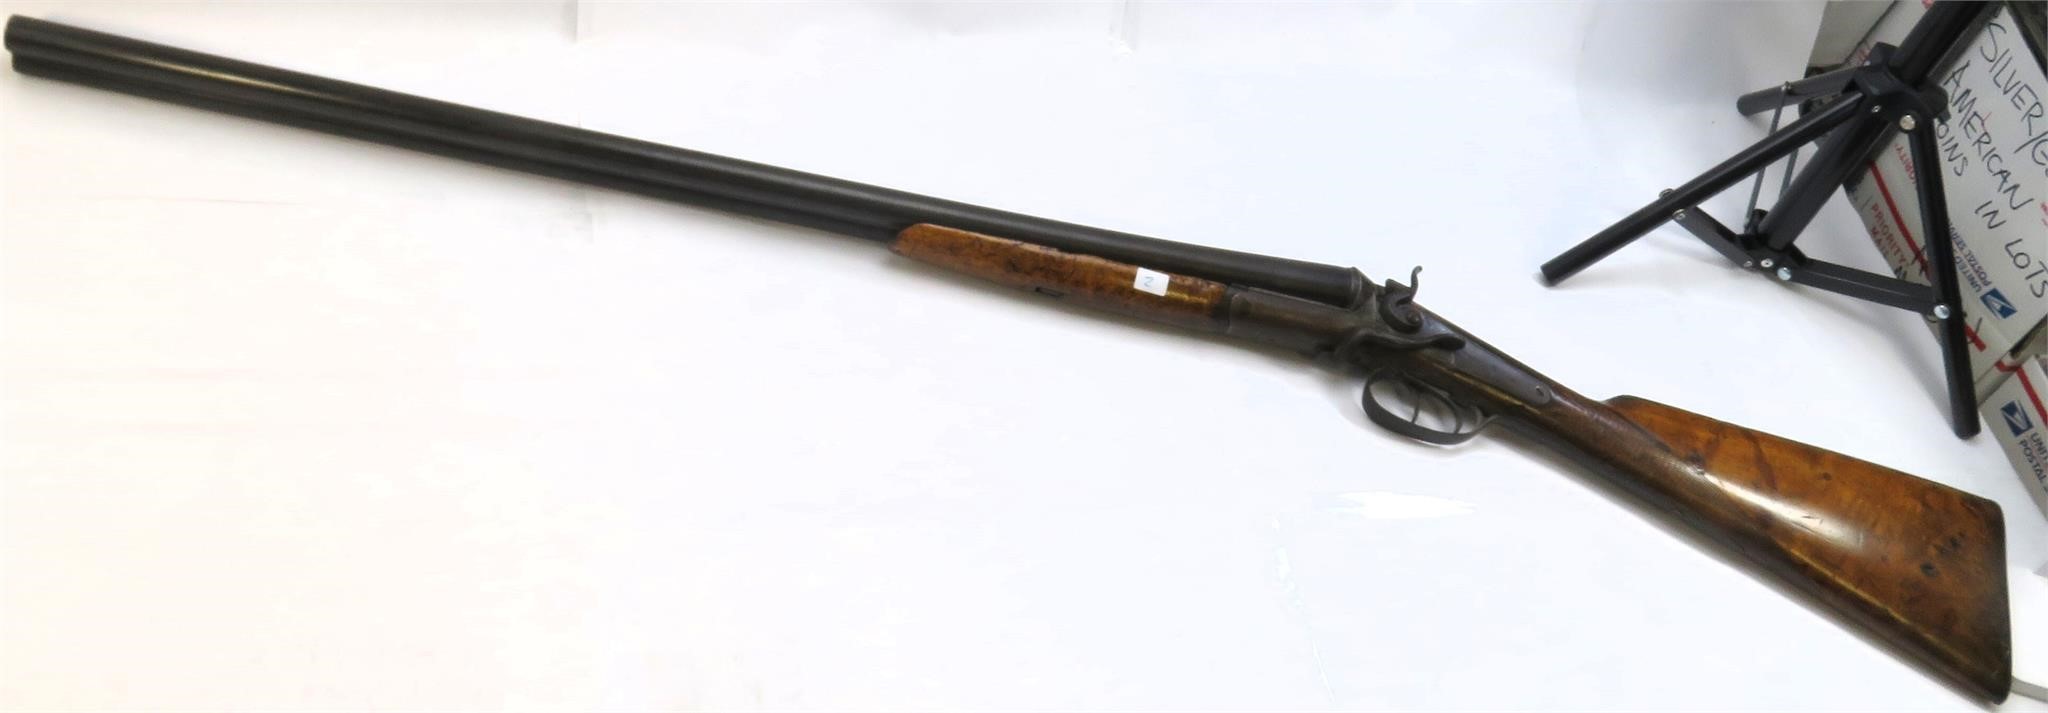 Antique W. Richards Double Barrel Shotgun, Katy